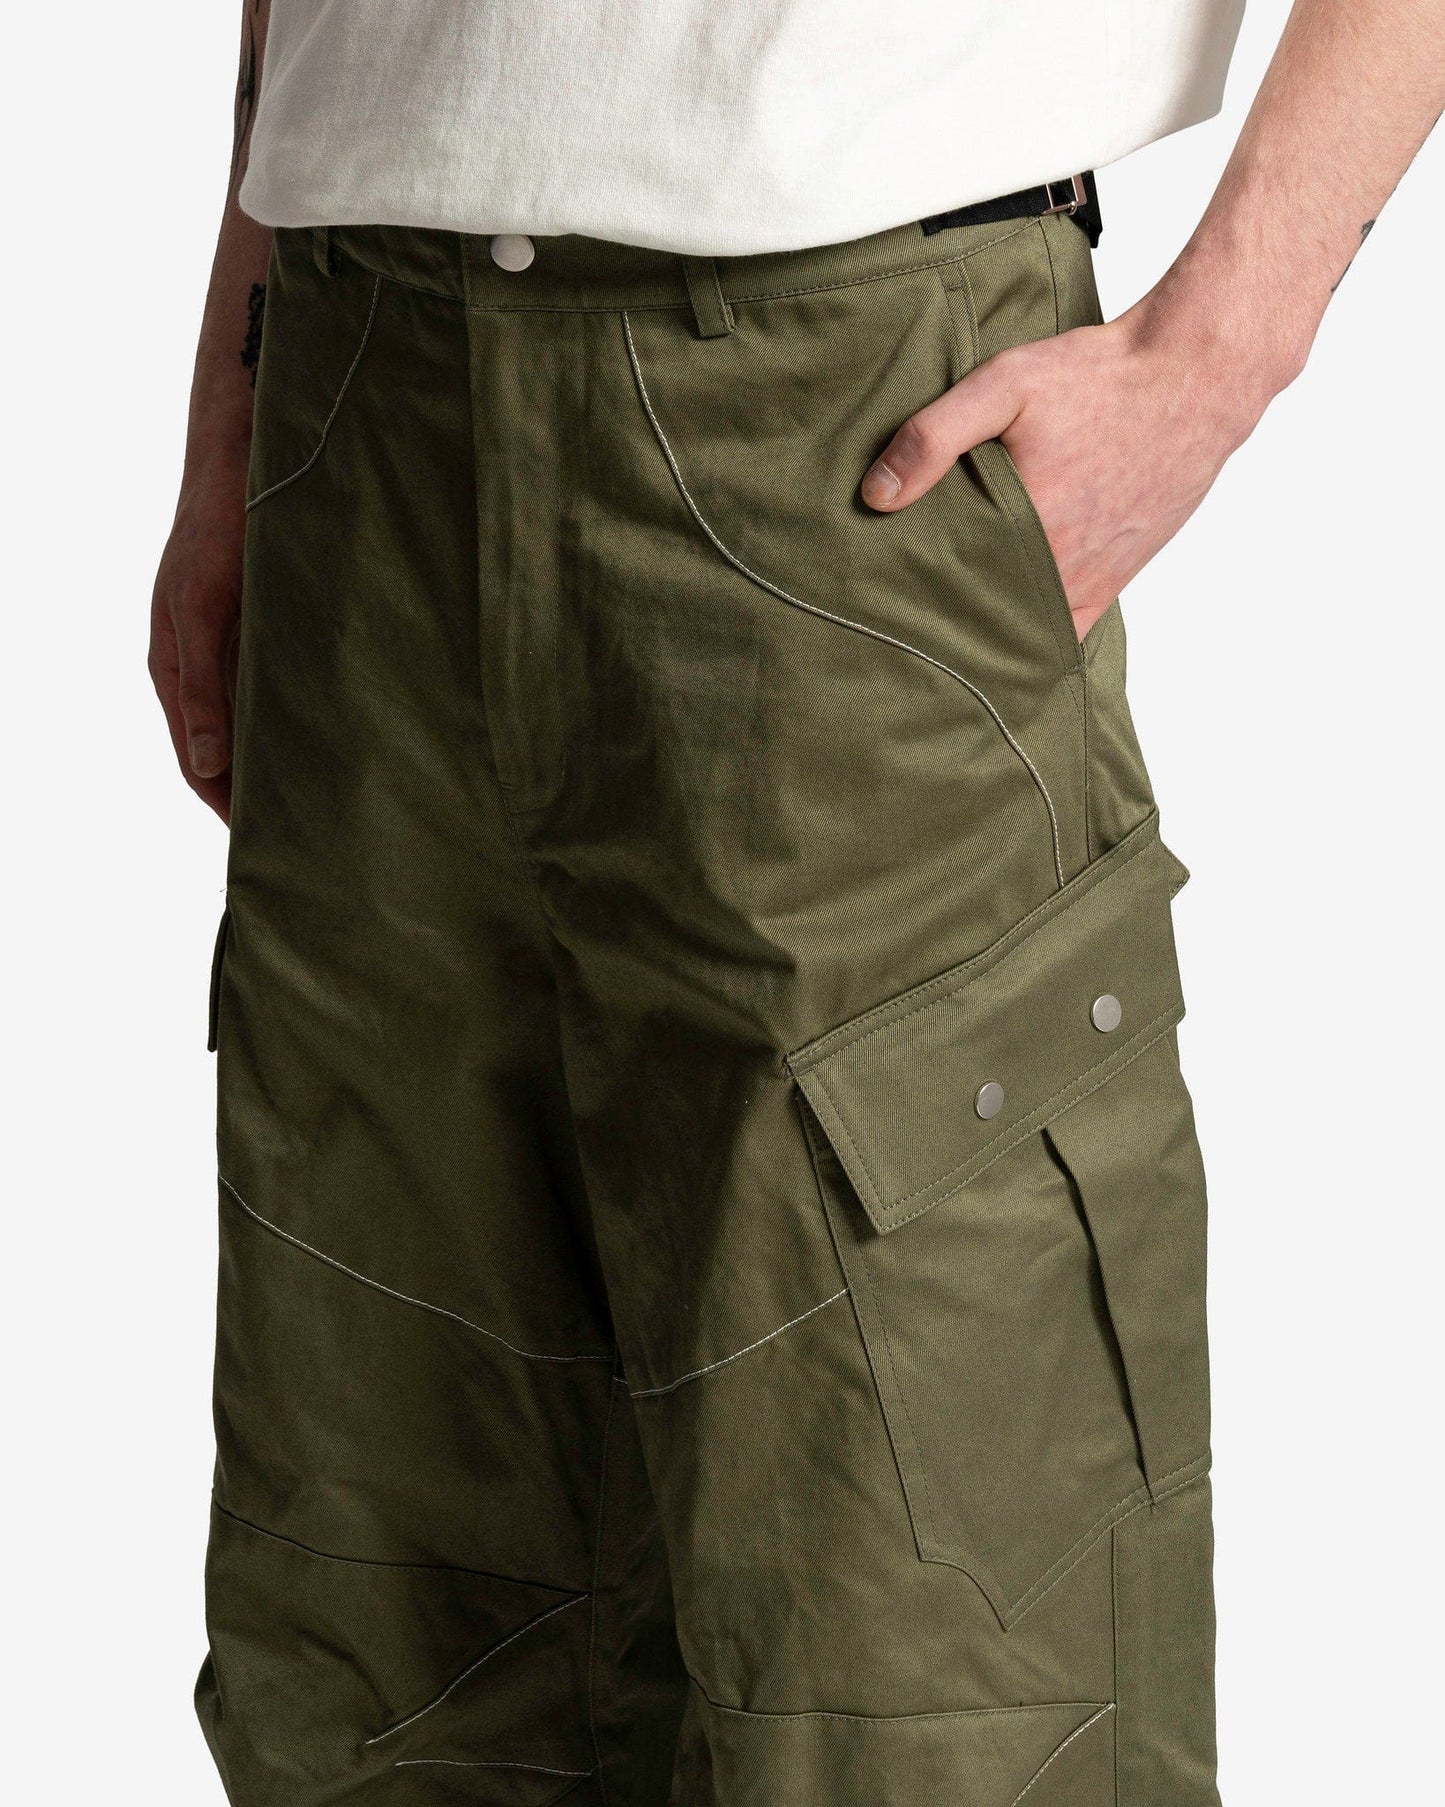 FFFPOSTALSERVICE Men's Pants Knee Dart B-1 Cargo in Olive